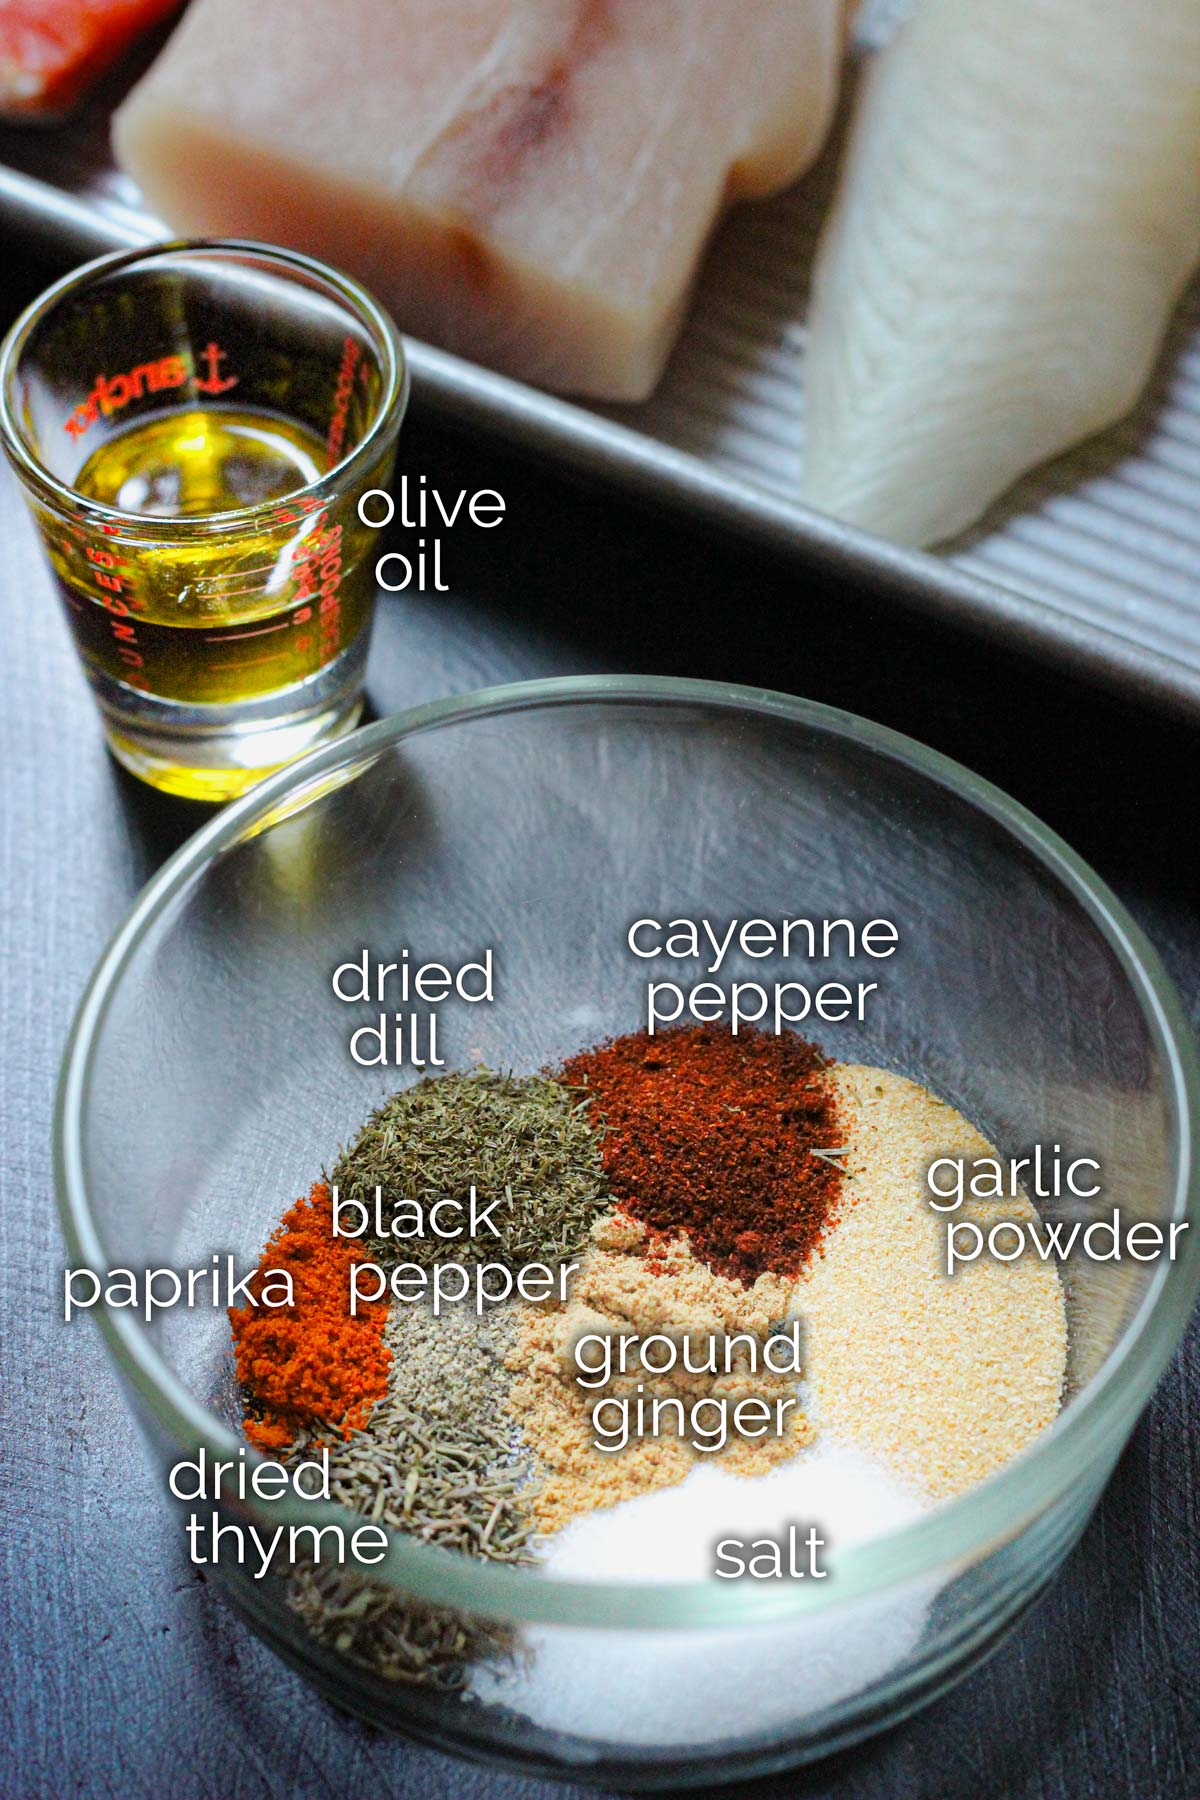 ingredients for fish seasoning in glass dish.